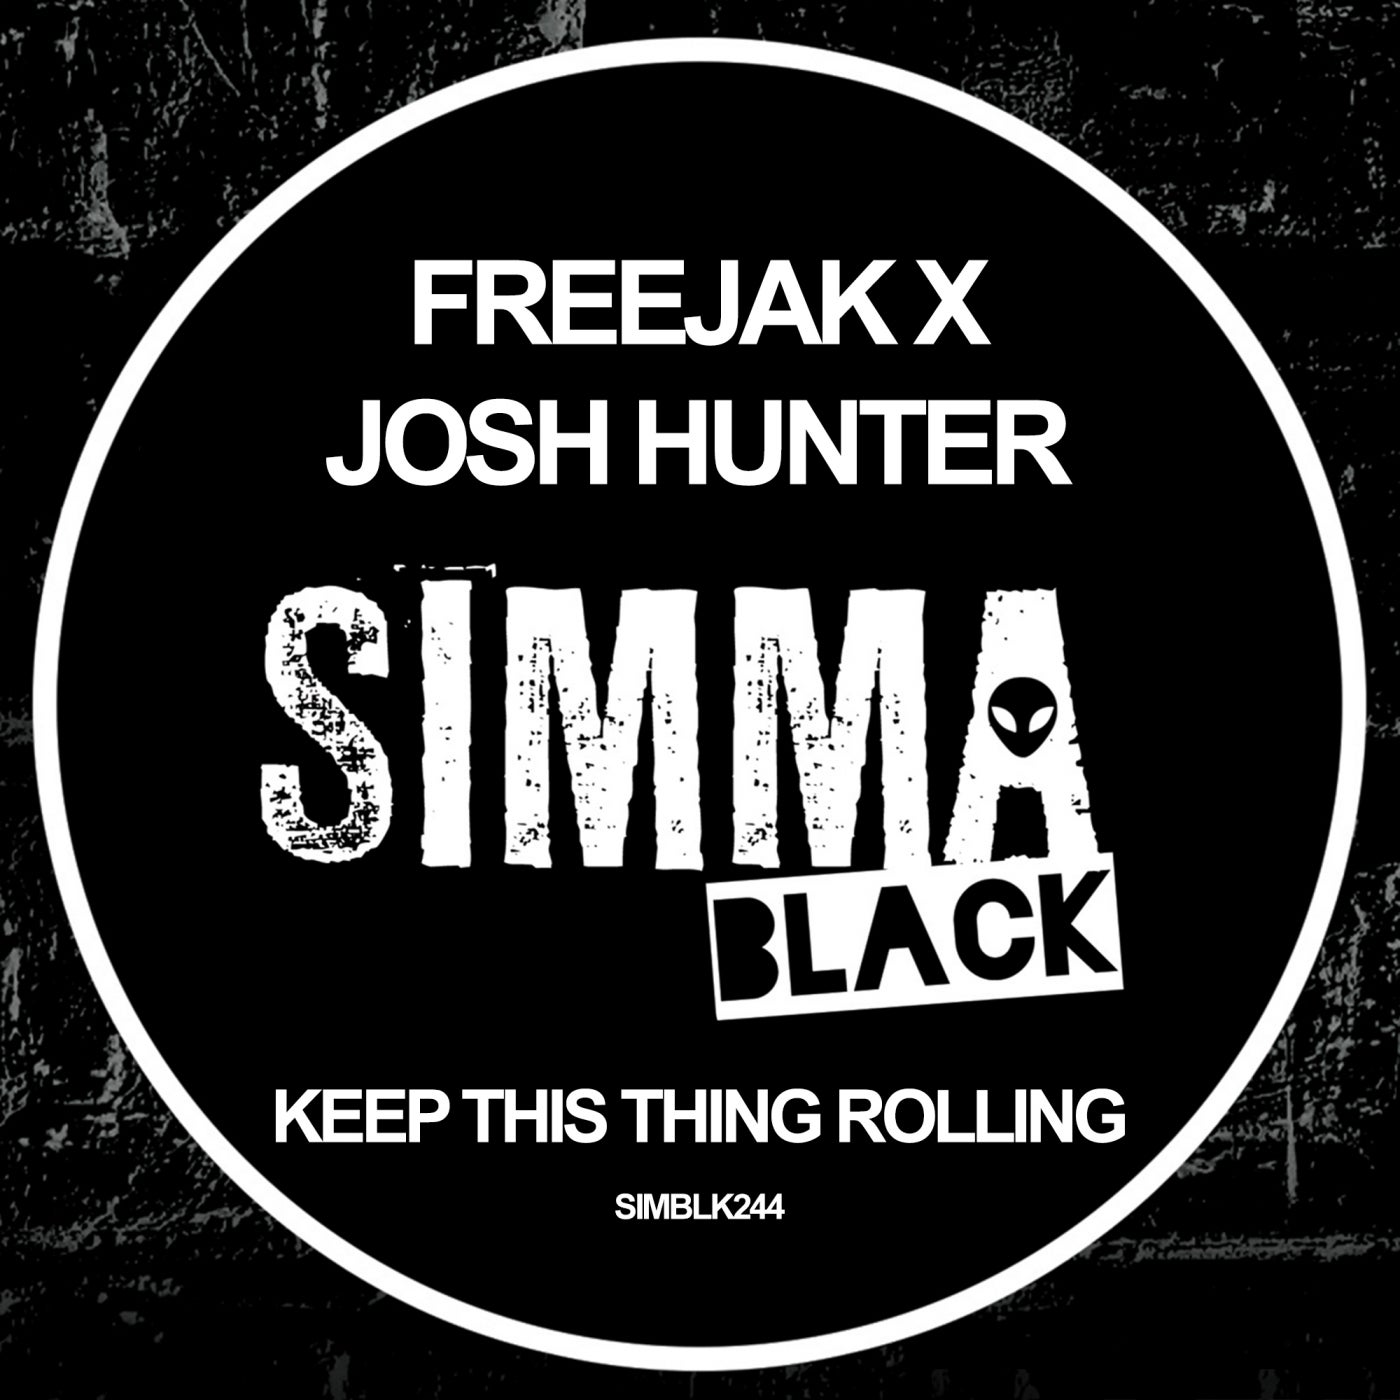 Freejak, Josh Hunter – Keep This Thing Rolling [SIMBLK244]